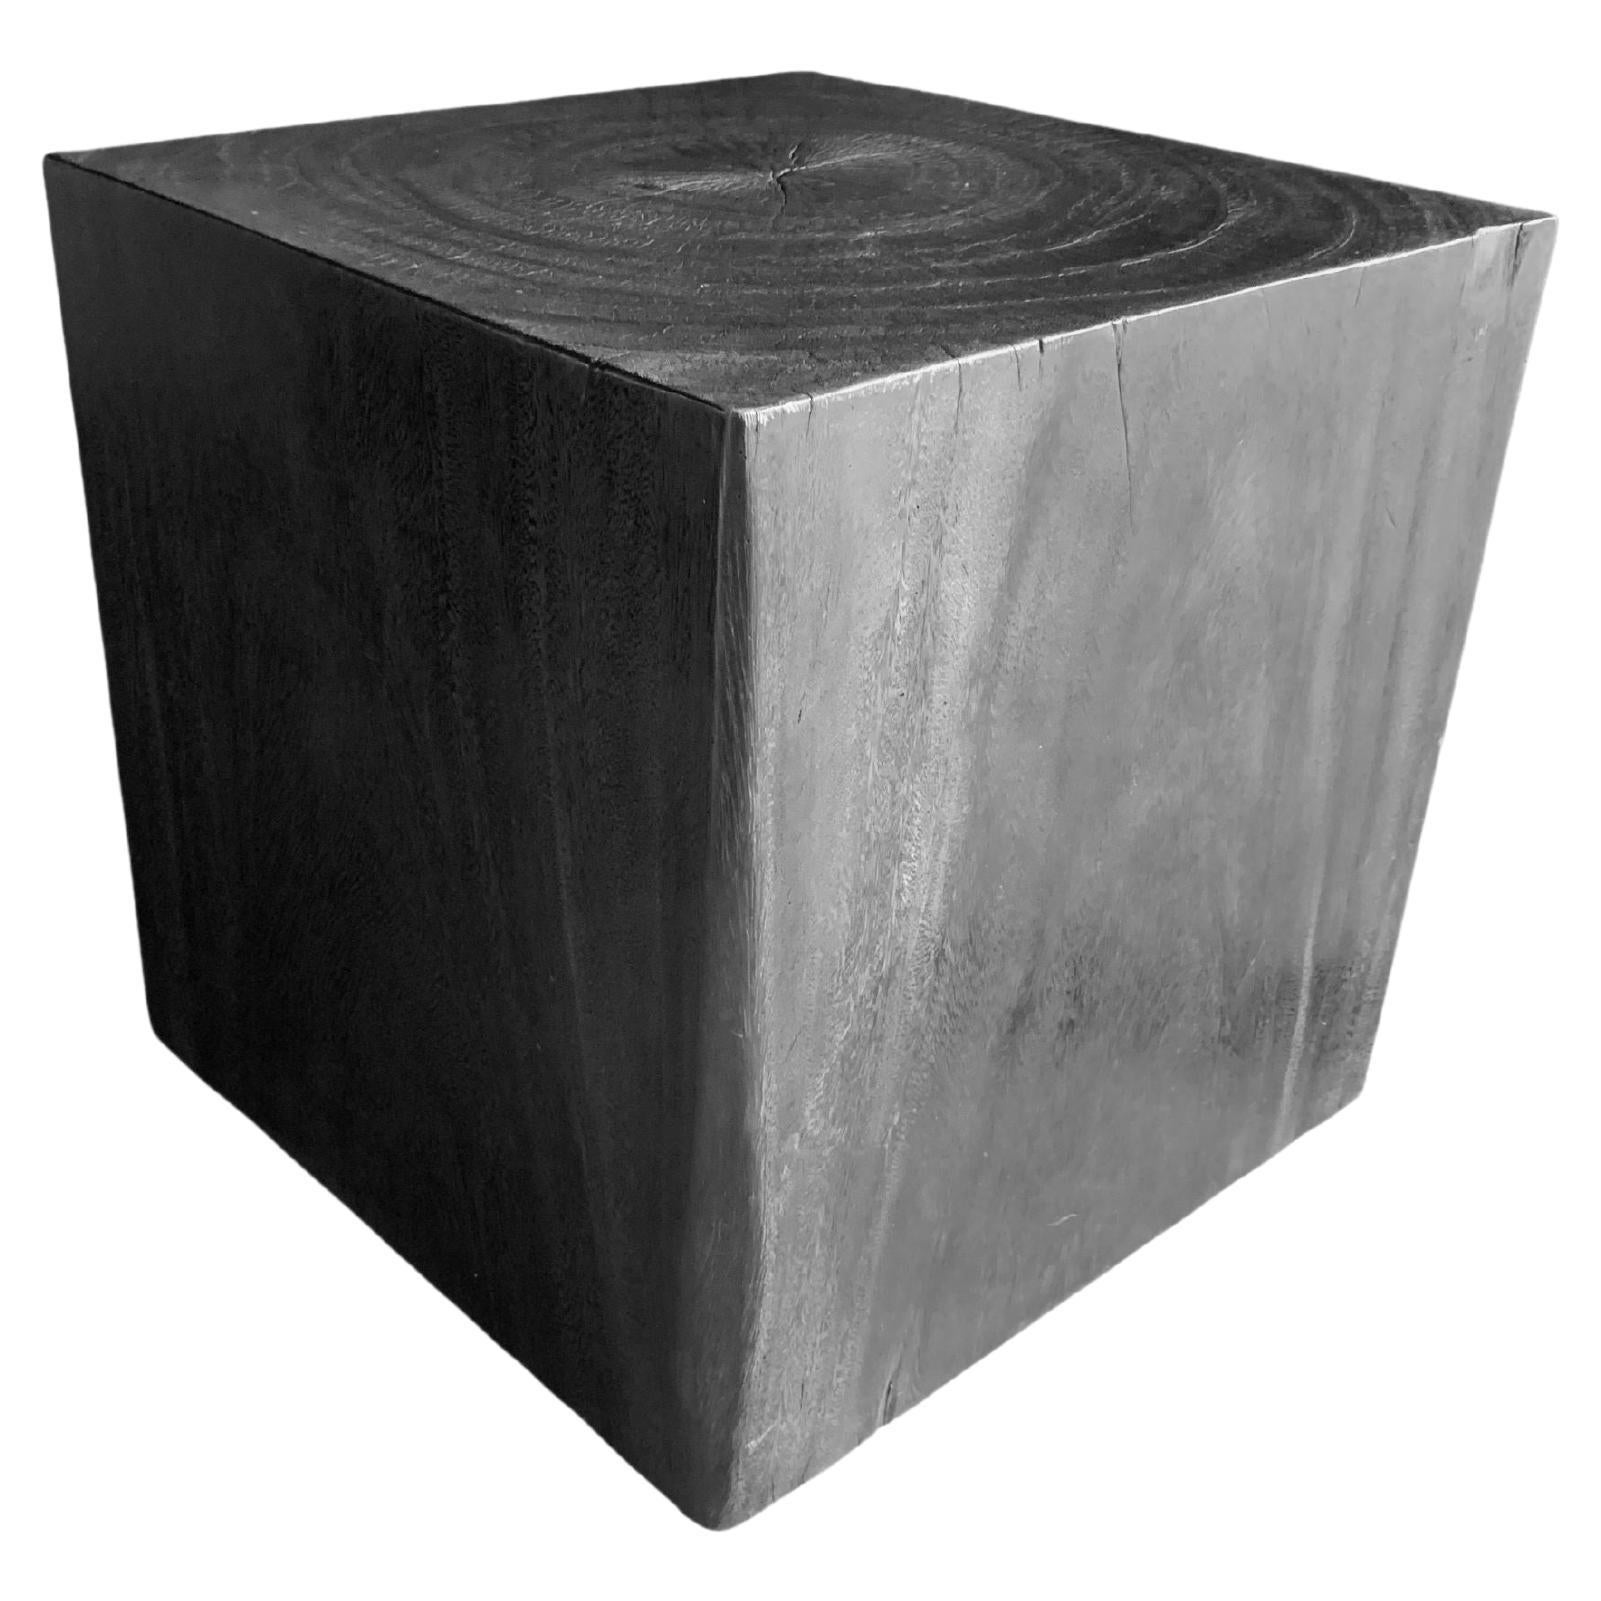 Mango Wood Pedestal or Side Table Burnt Finish